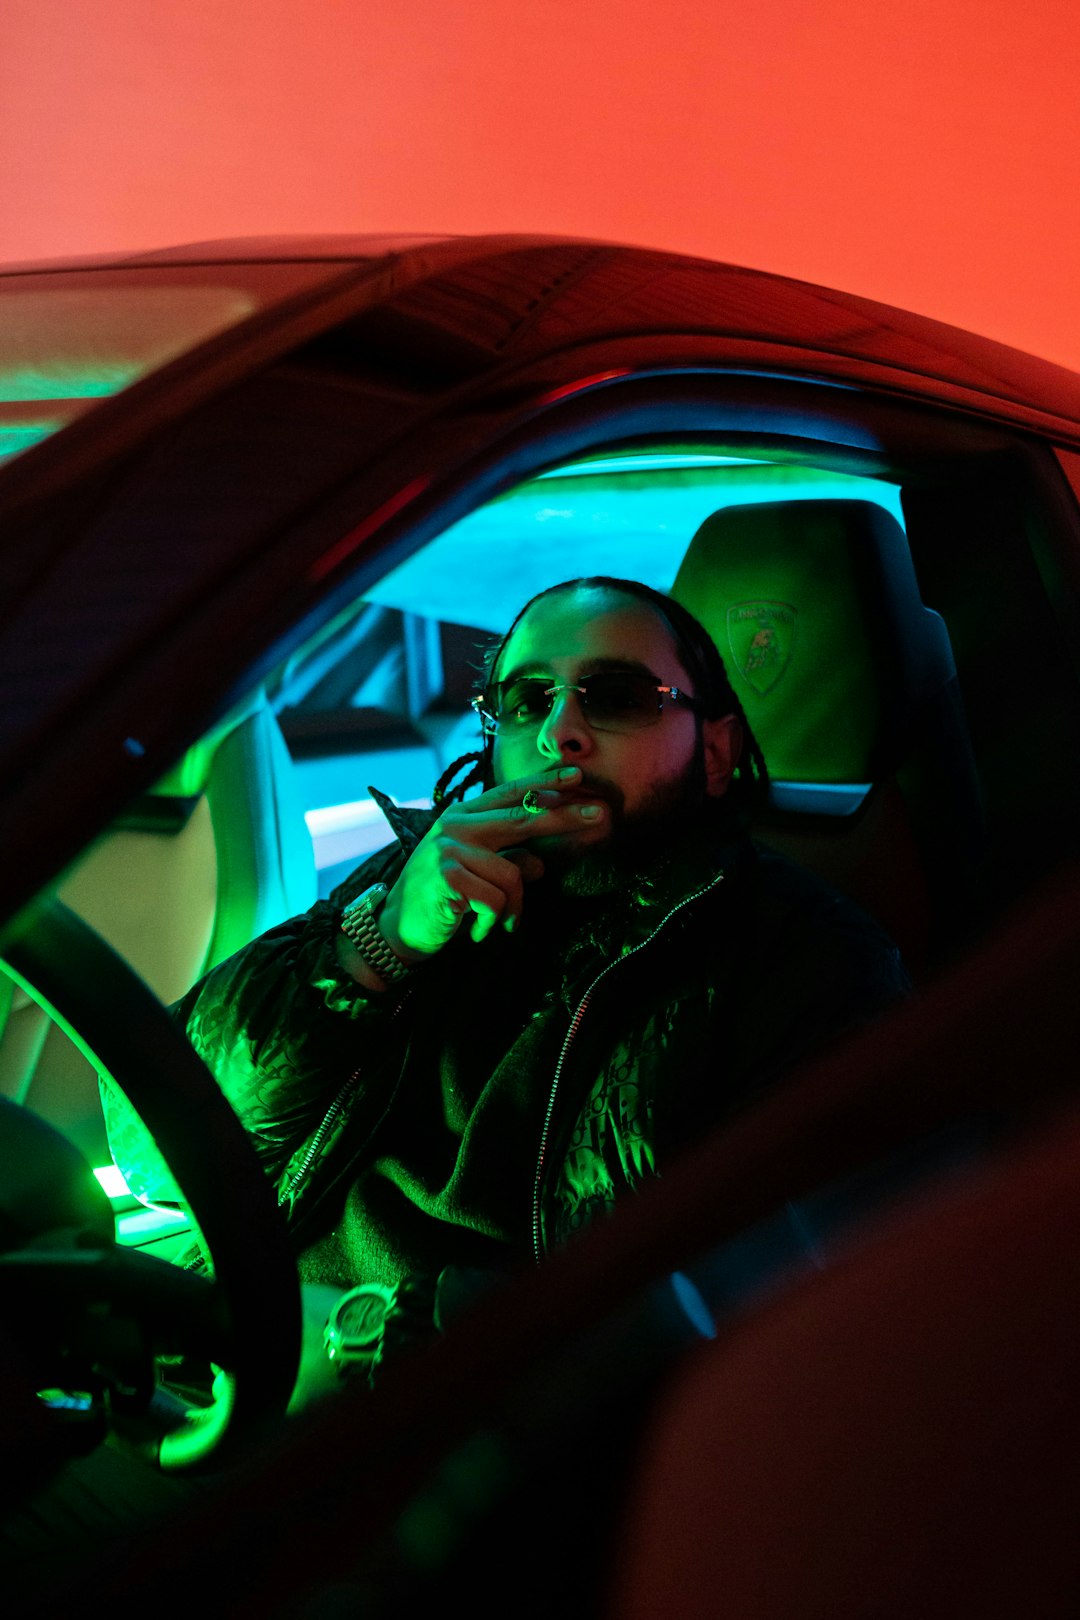 man in black jacket wearing sunglasses sitting inside car